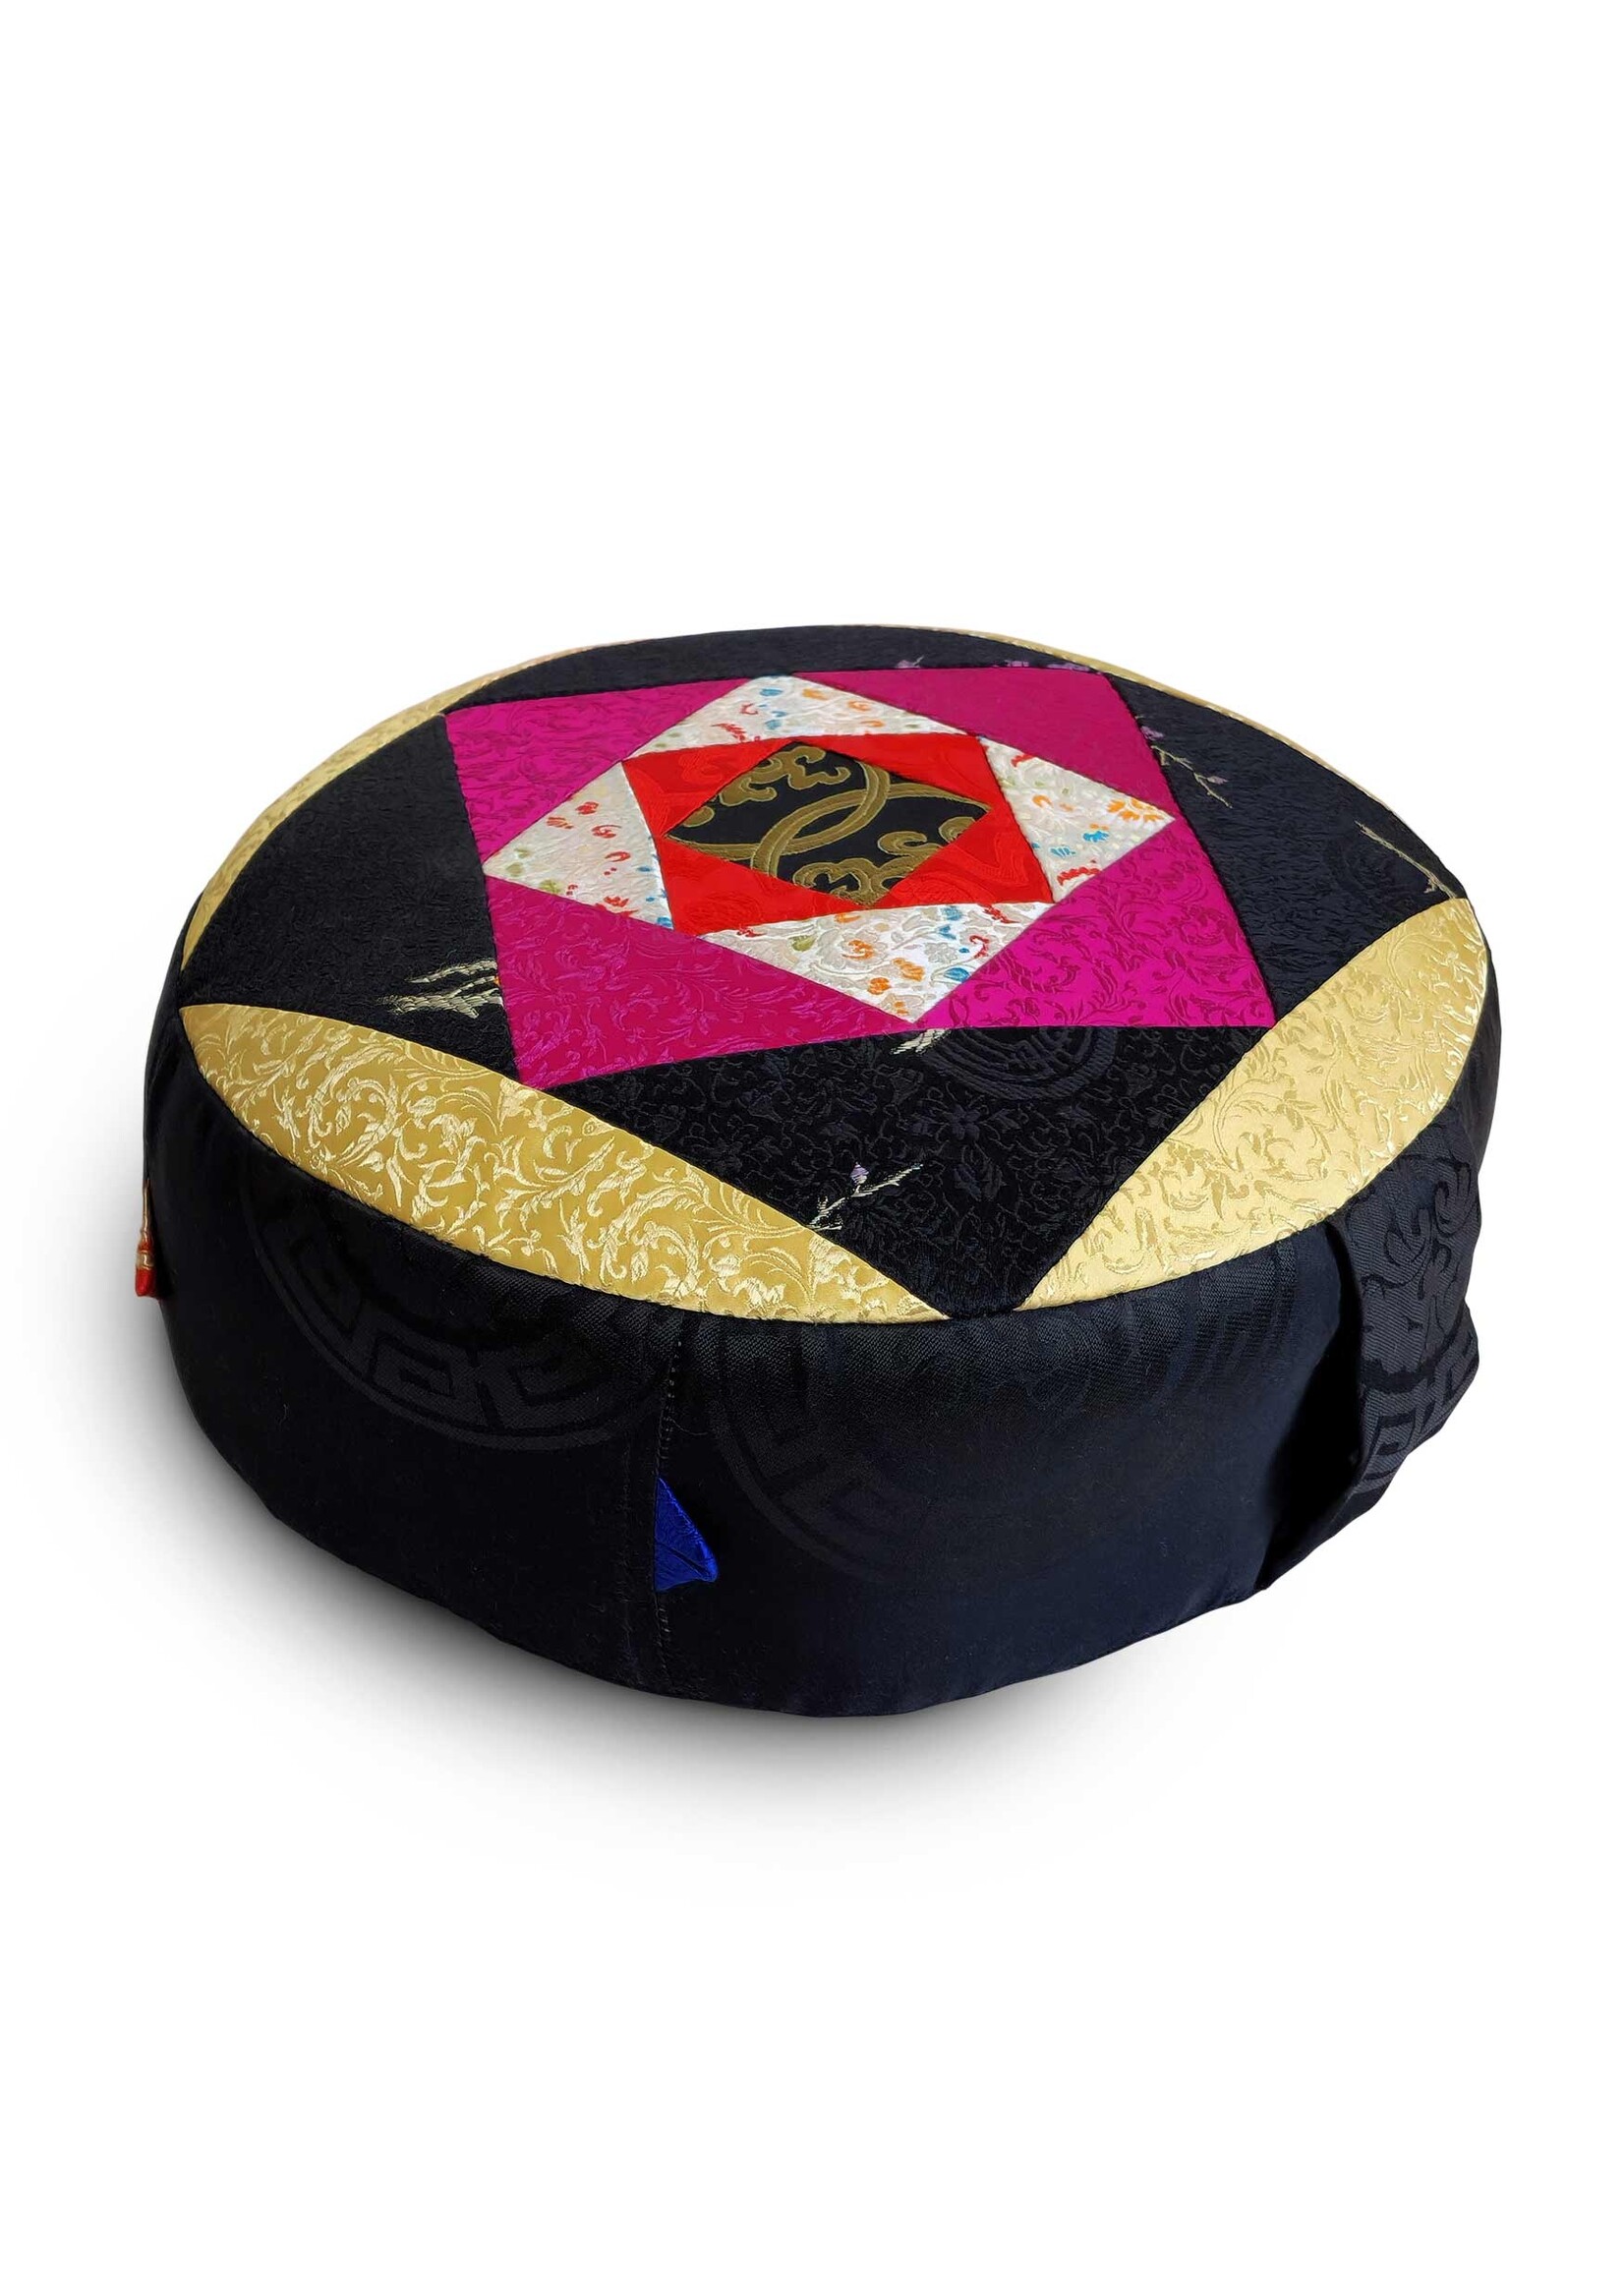 Tibetan Zafu Meditation Cushion, Made of Silk Brocade with Kapok Filling, black